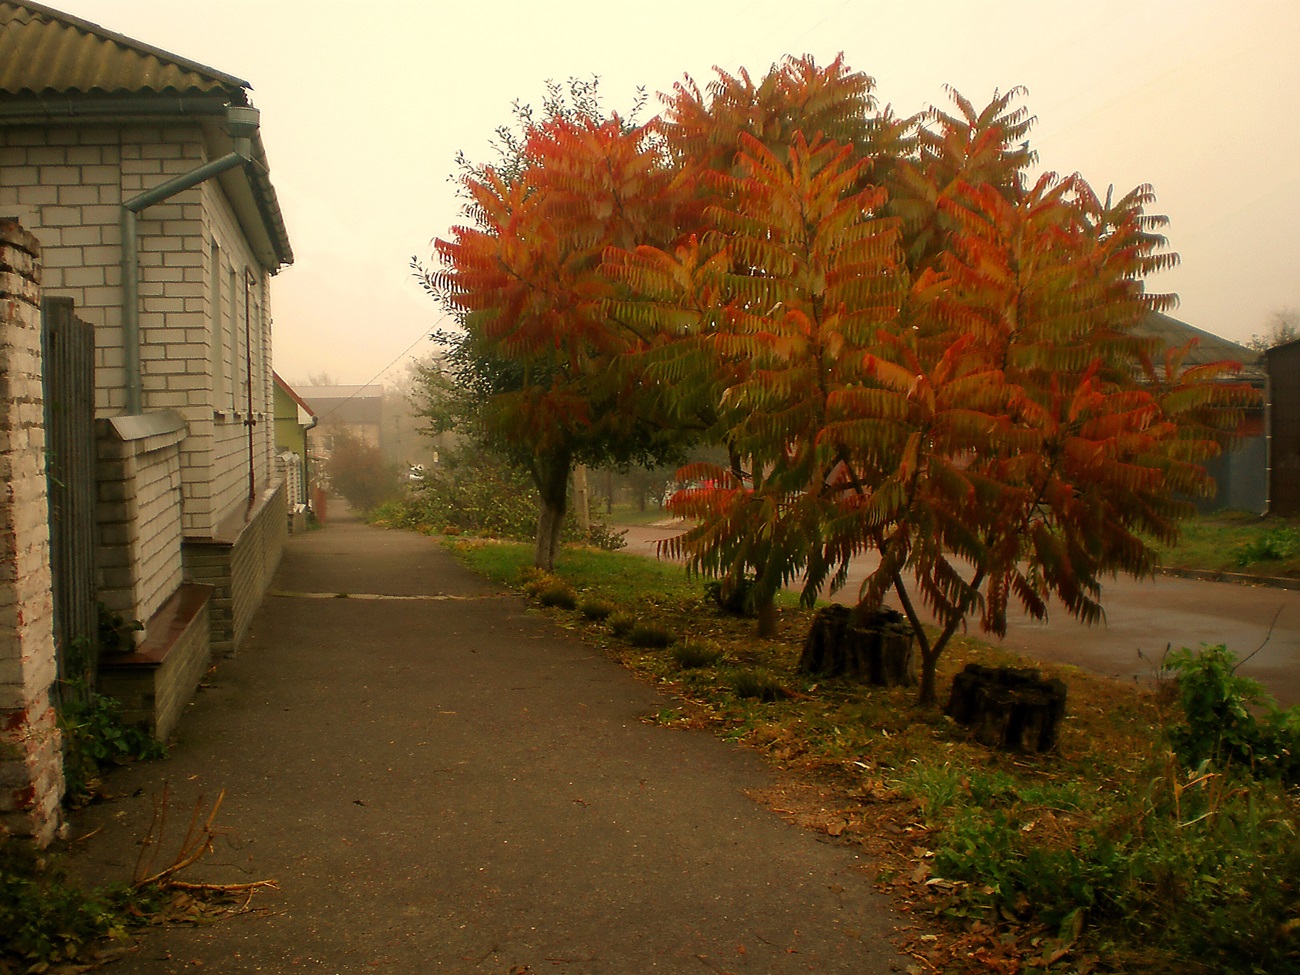 Осень в провинции